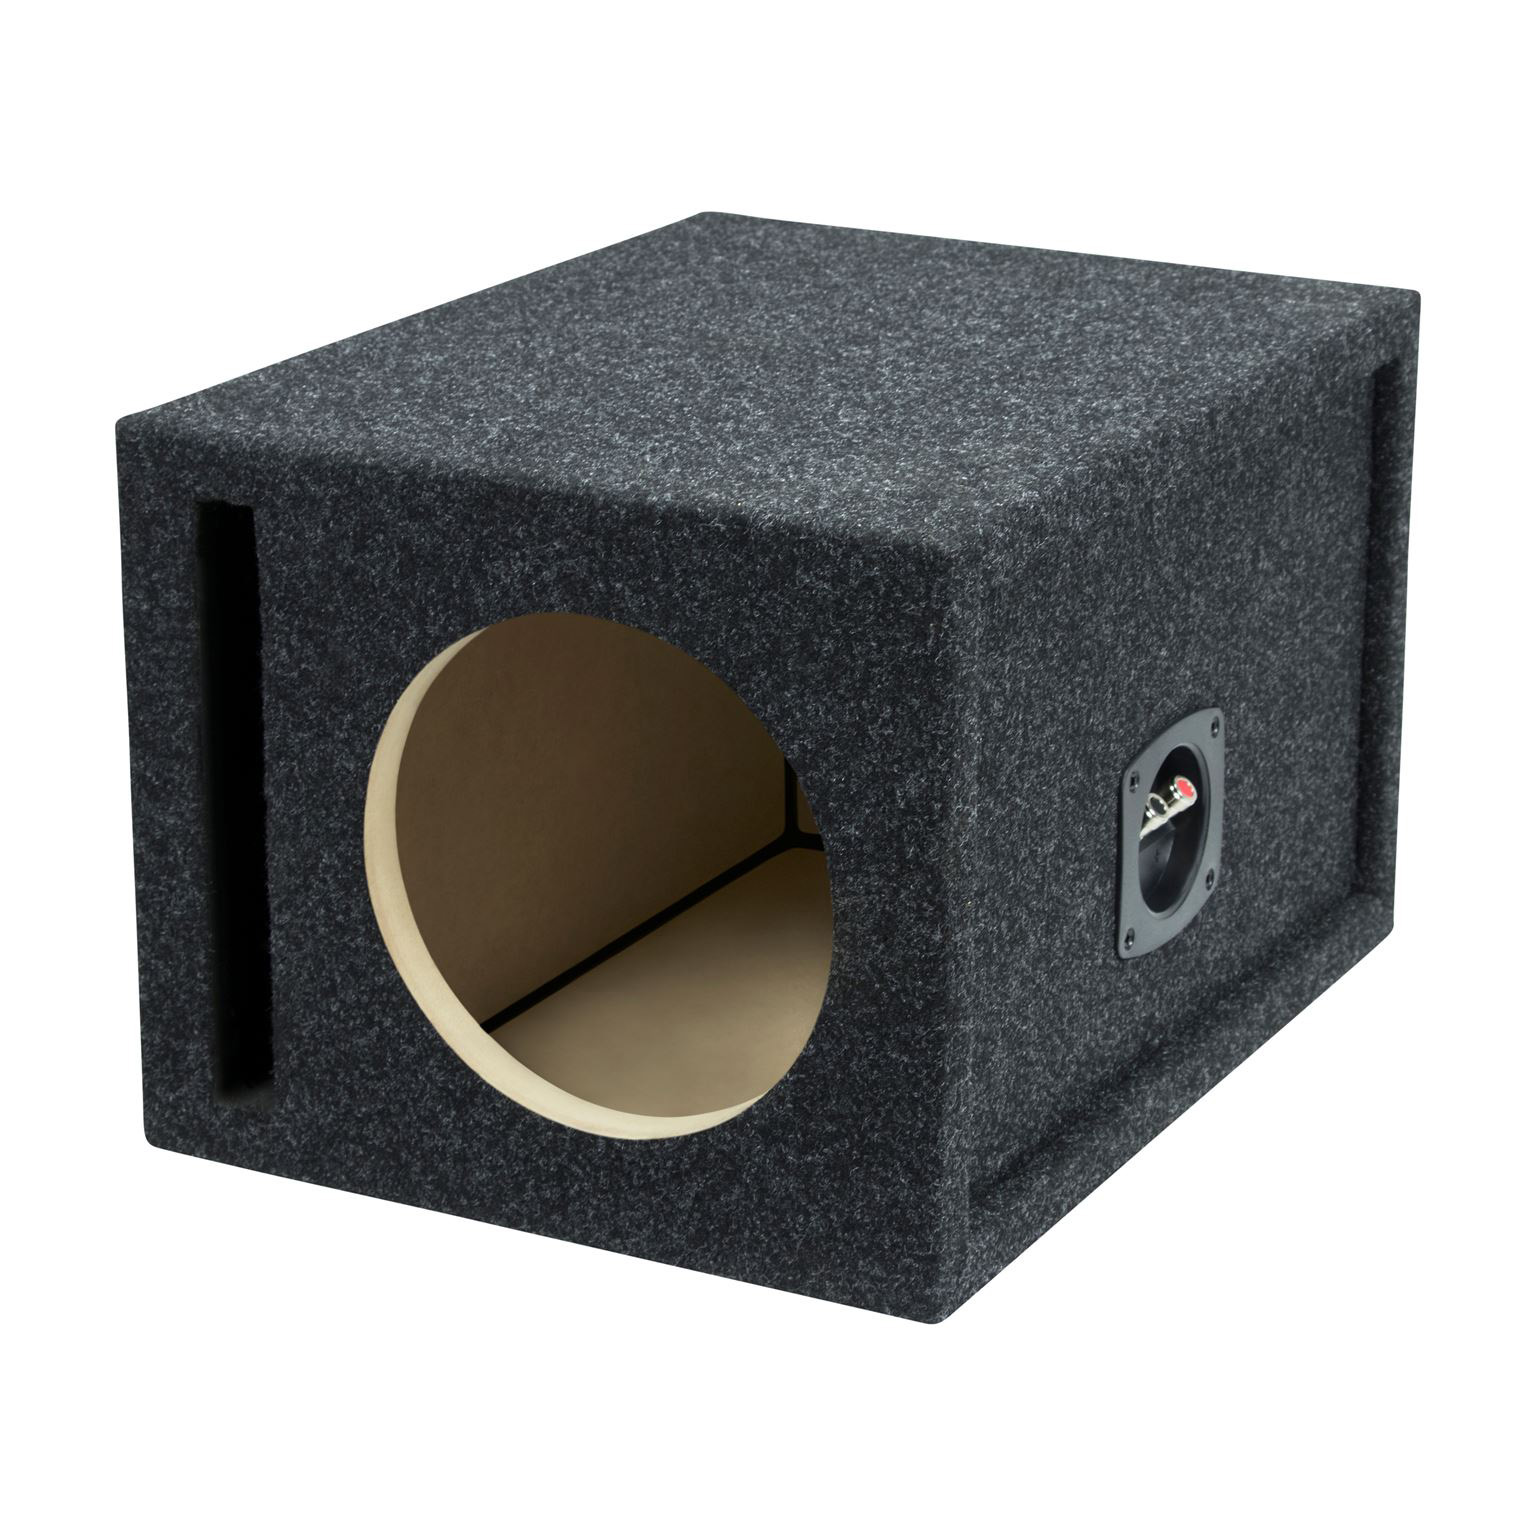 MDF Empty Bass Enclosure Speaker Box for Car Truck SUV, Wooden Car Subwoofer Box Empty Subwoofer Box